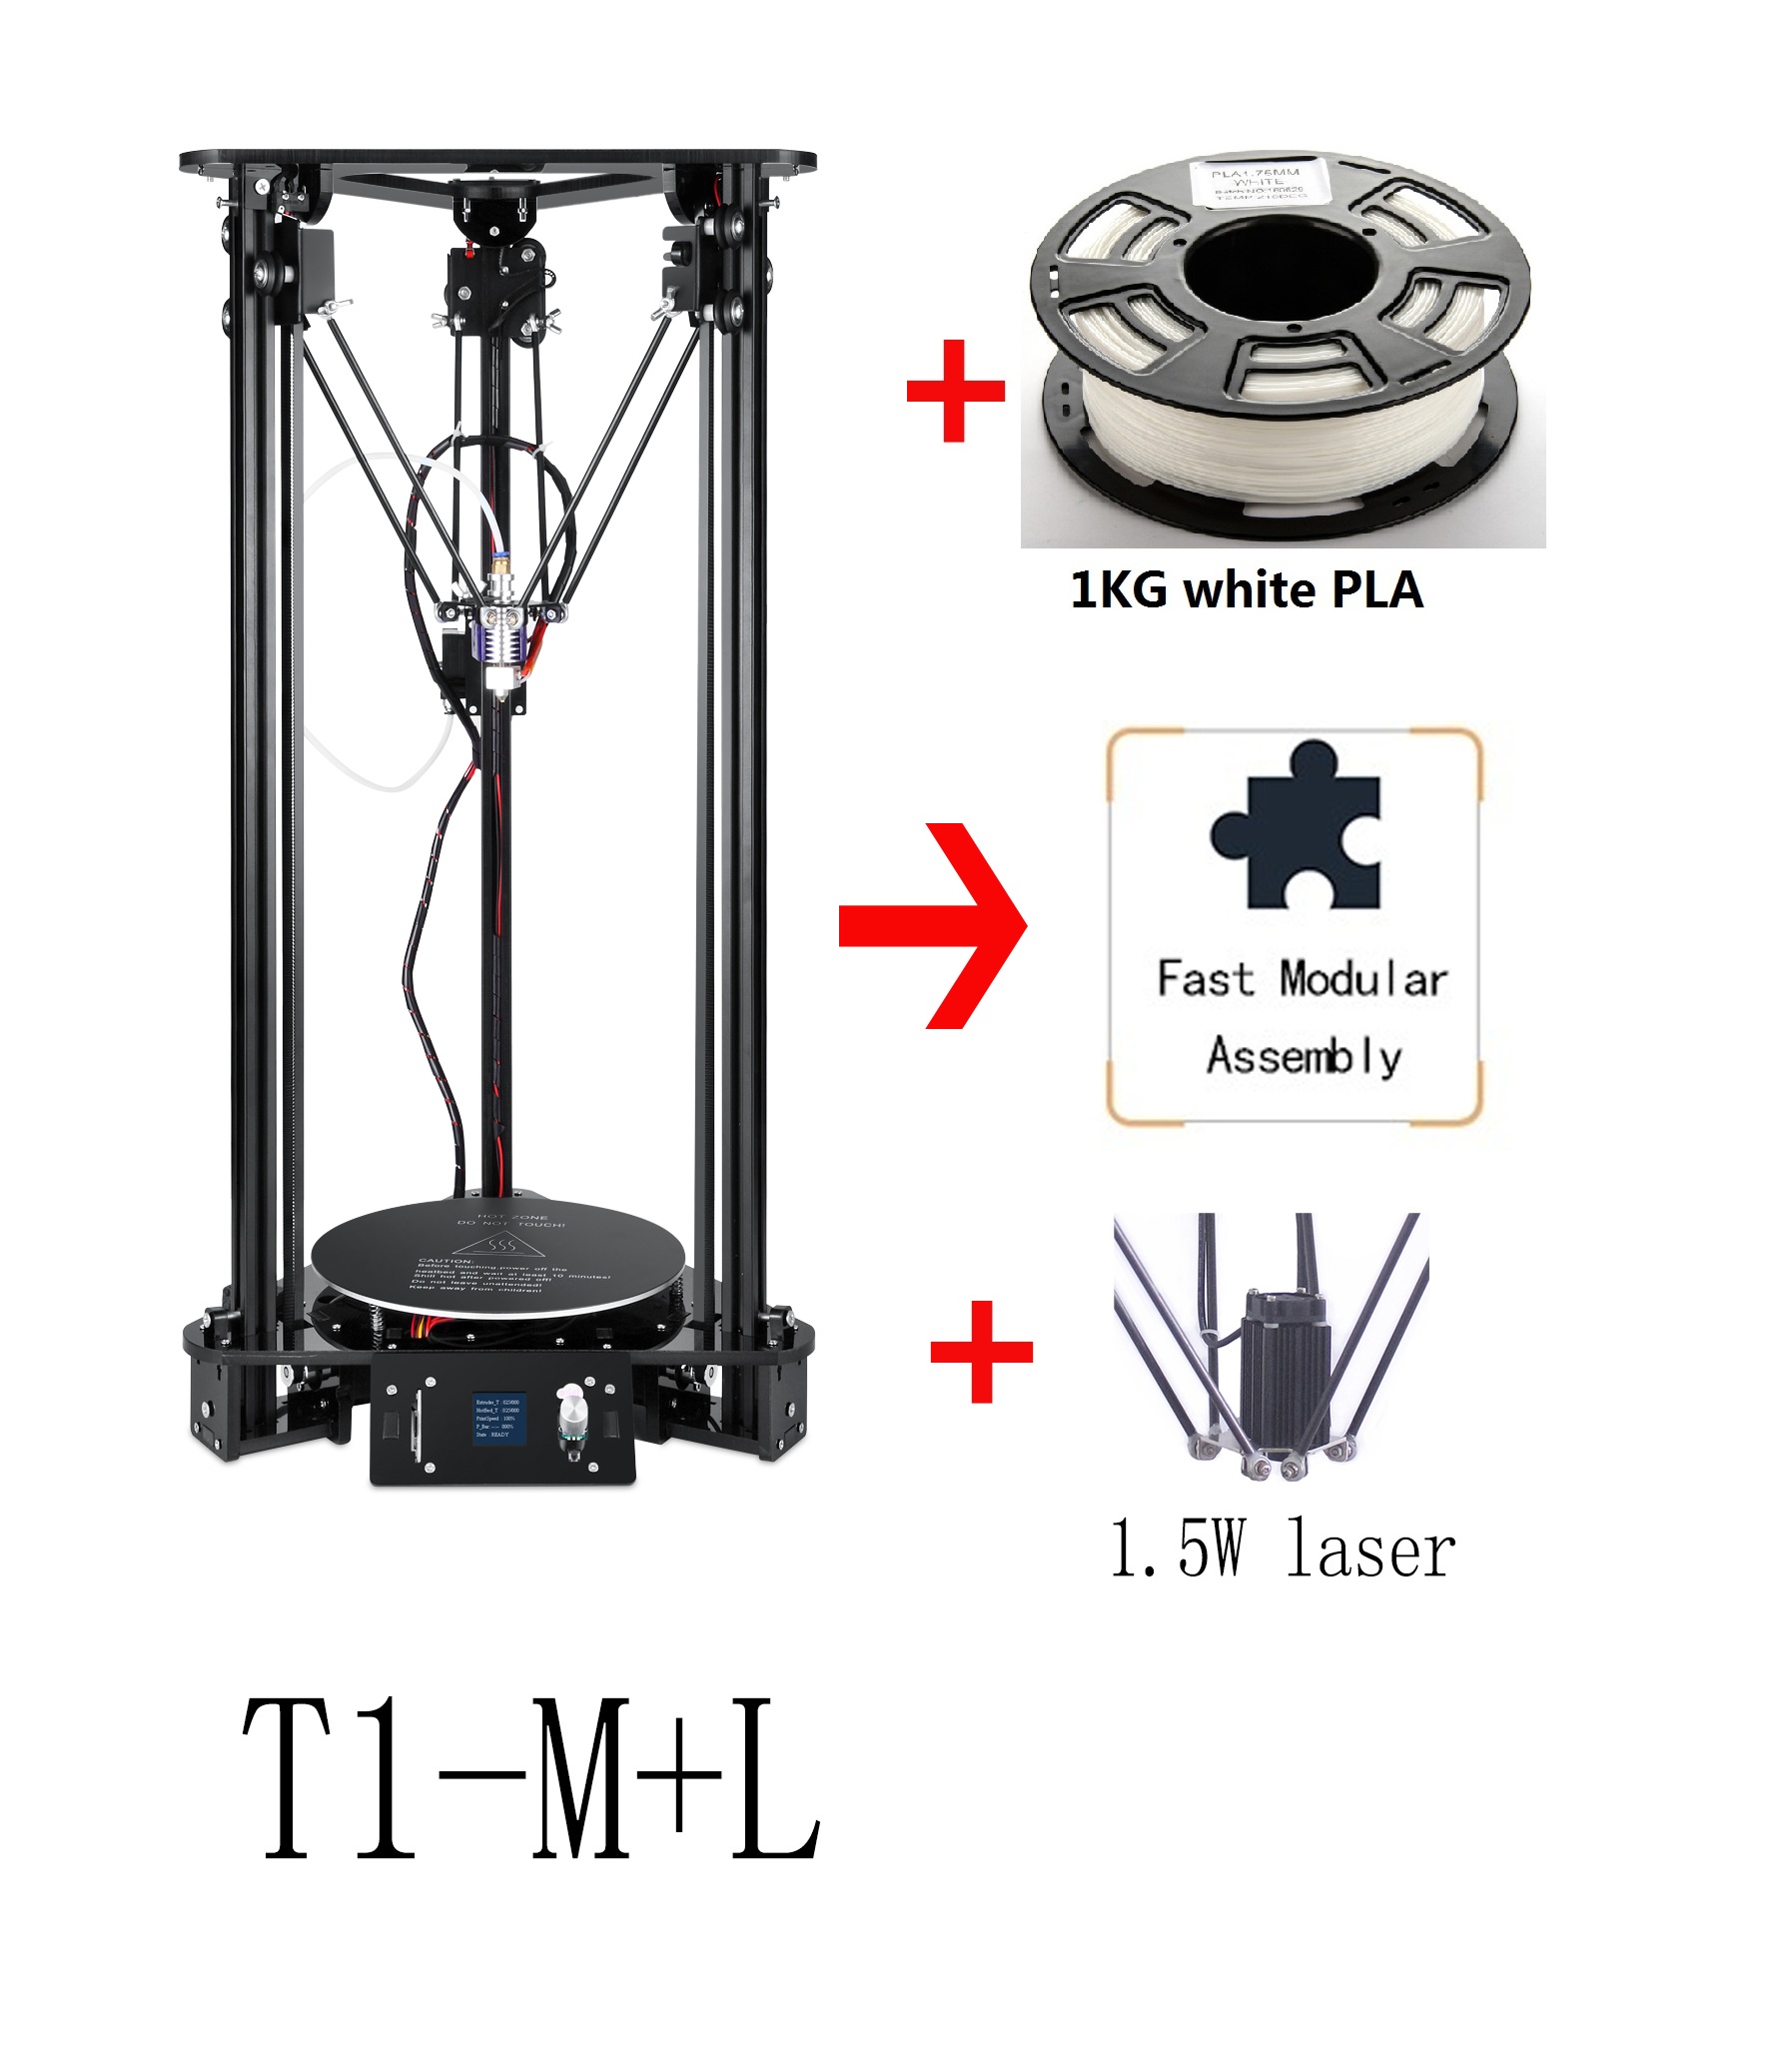 EZT® T1-M+L Delta Kossel 3D Printer DIY Kit 300*320mm Large Printer Size With Laser Engraving/1KG Filament Support Intelligent Leveing/Auto Change Fil 10